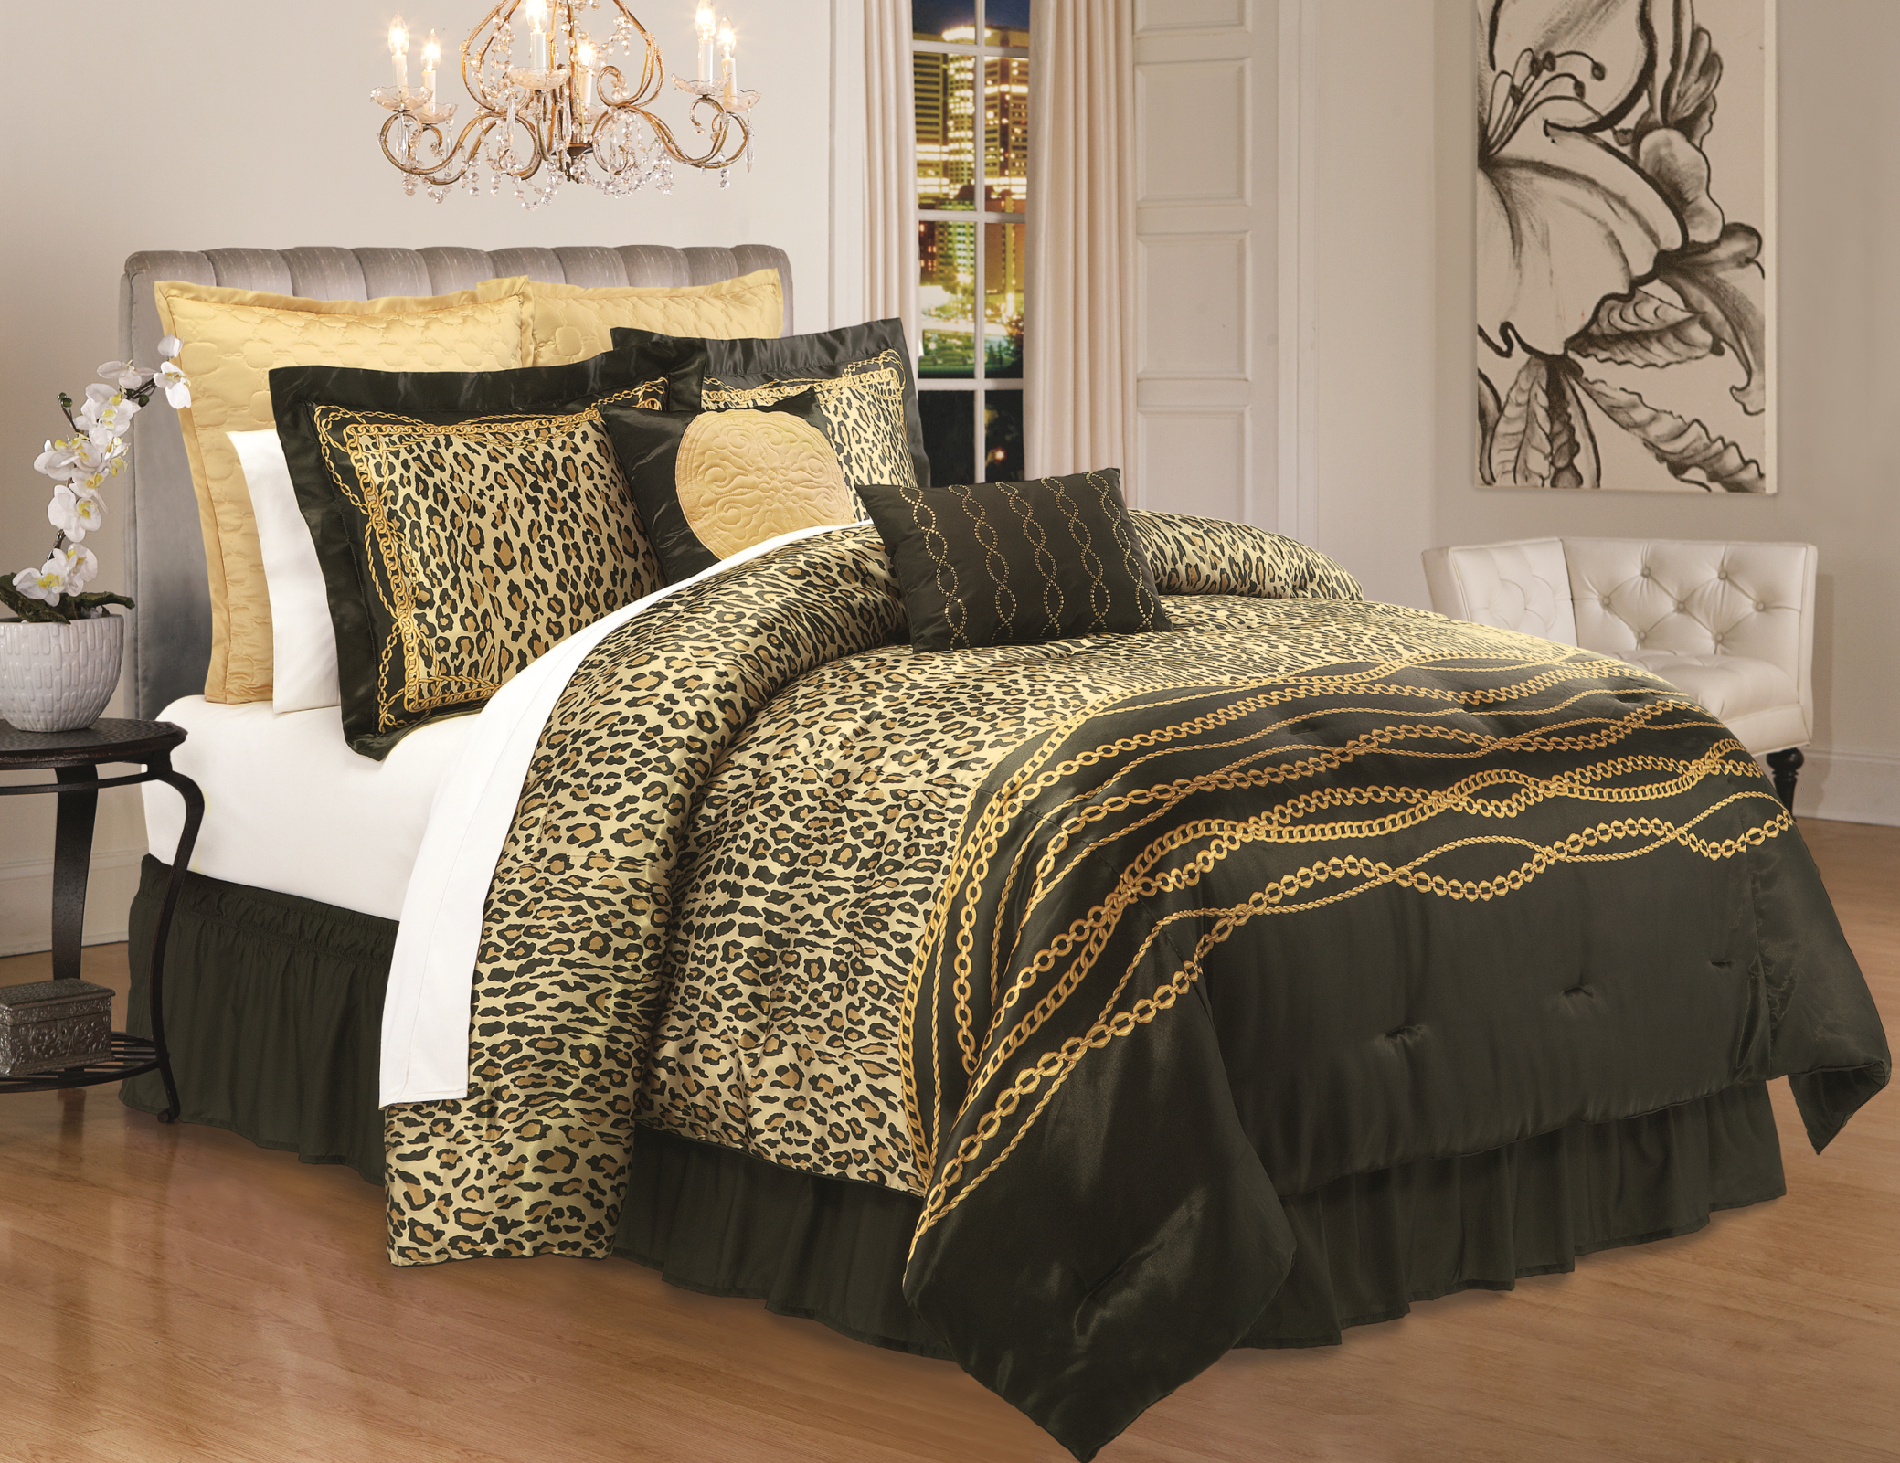 Kardashian Kollection Home Safari Luxe Comforter Set